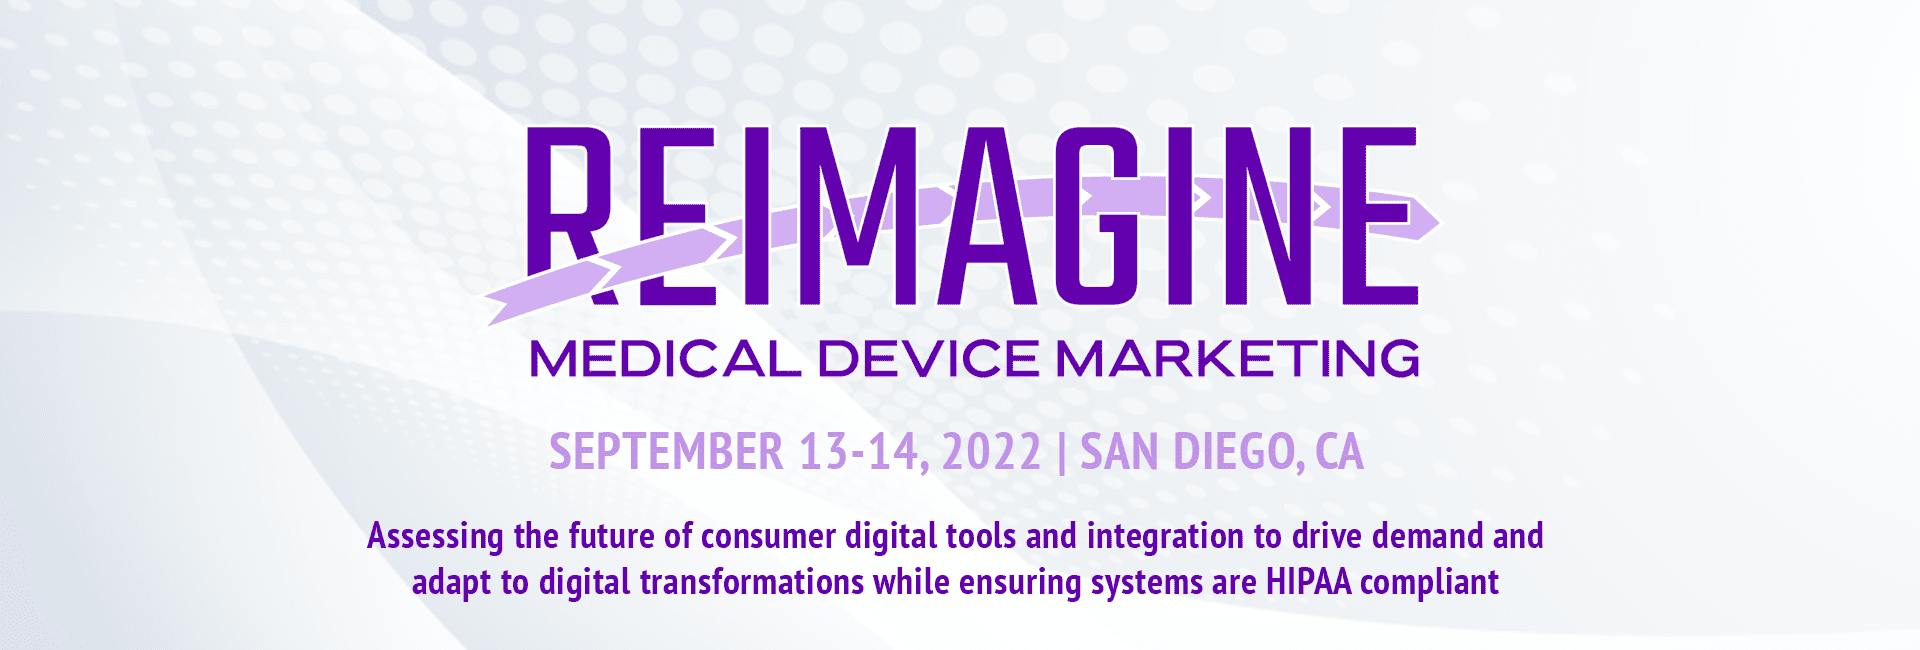 Re Imagine Medical Device Marketing